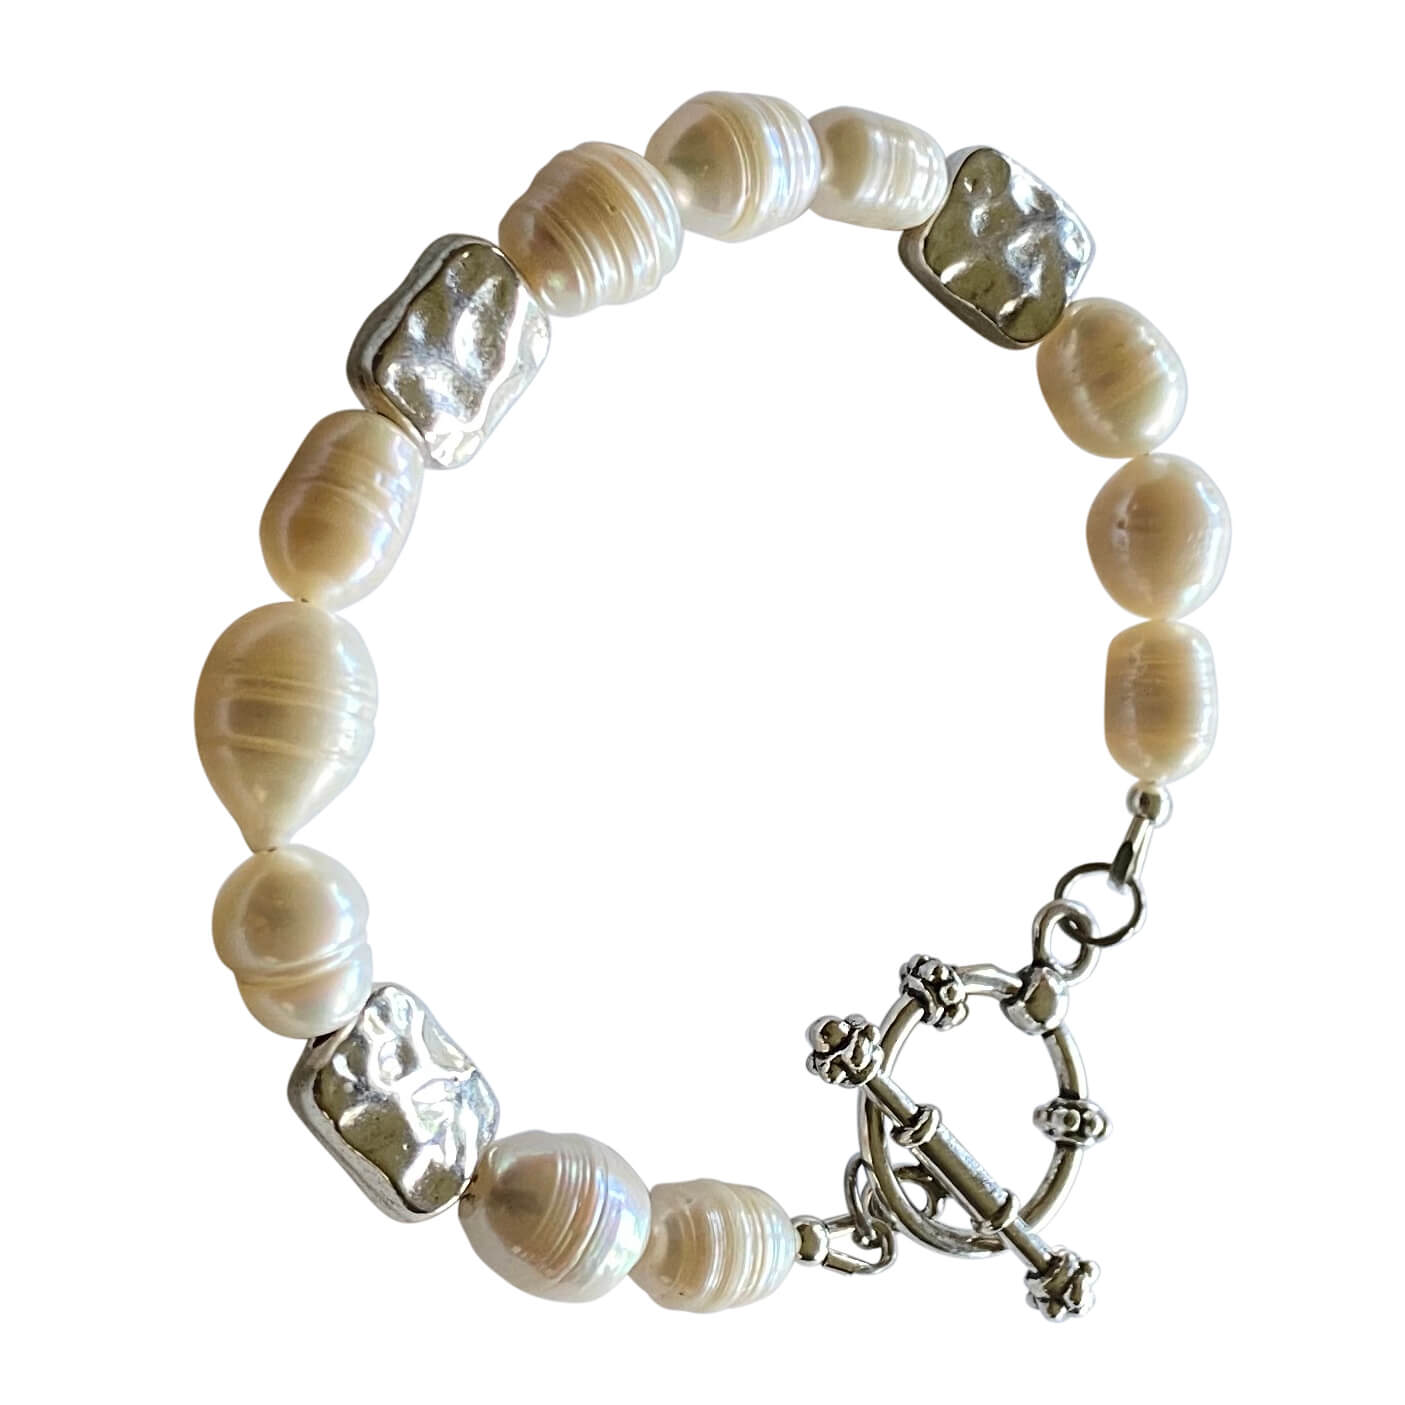 Twisted Freshwater Pearl Bracelet  Pearls jewelry diy, Beaded jewelry,  Handmade jewelry tutorials